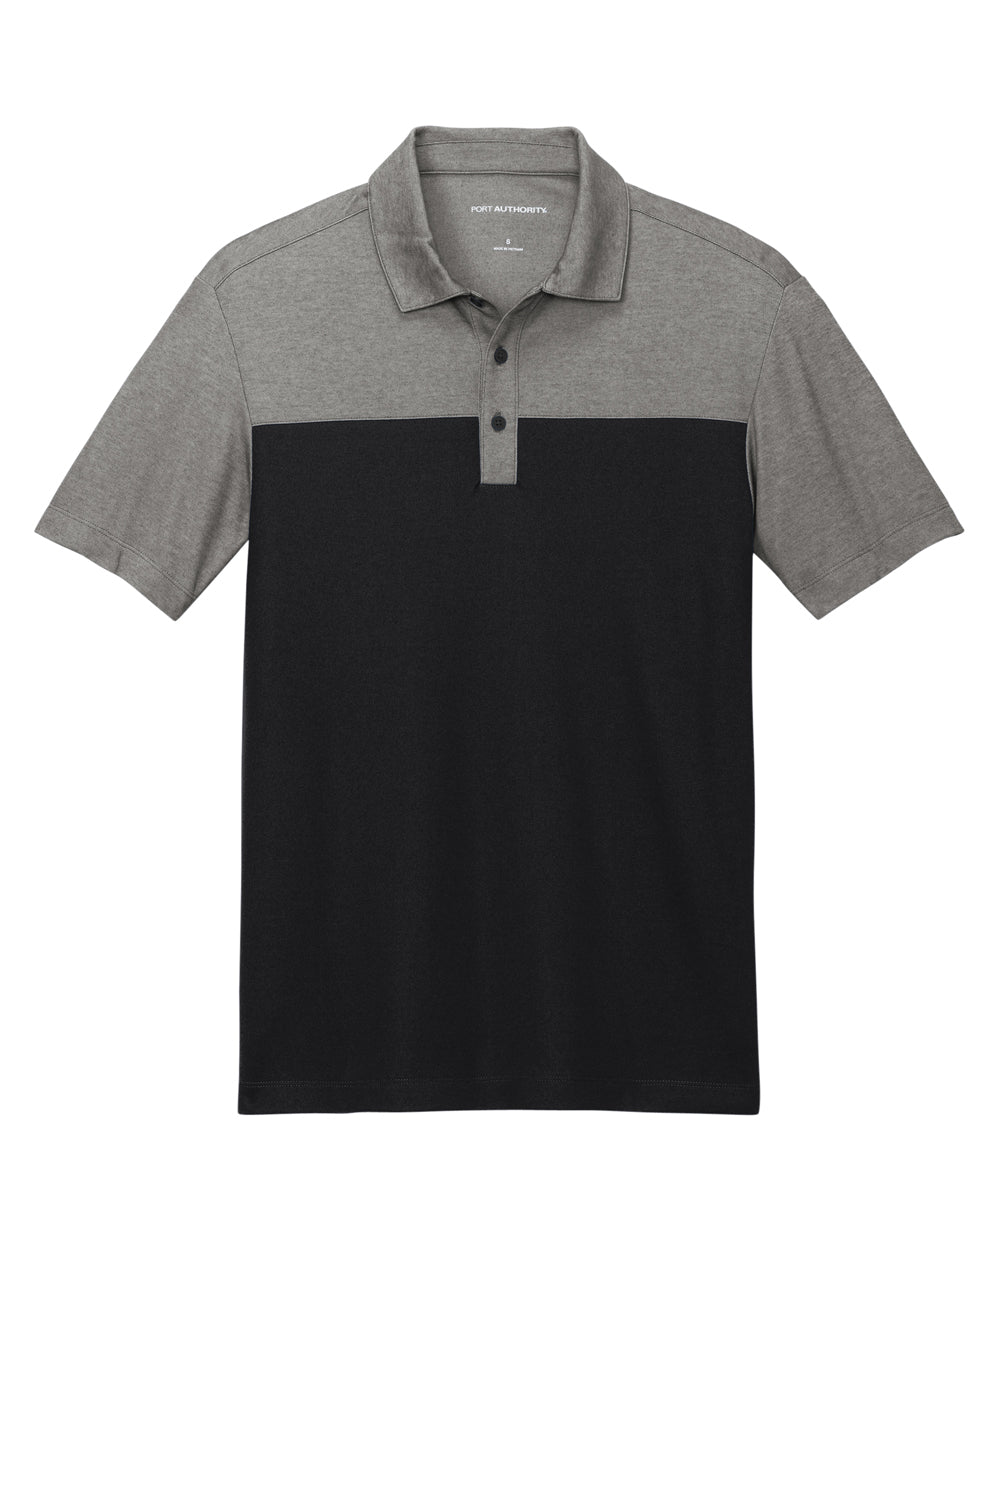 Port Authority Mens Fine Pique Blocked Short Sleeve Polo Shirt Deep Black/Heather Charcoal Grey Flat Front